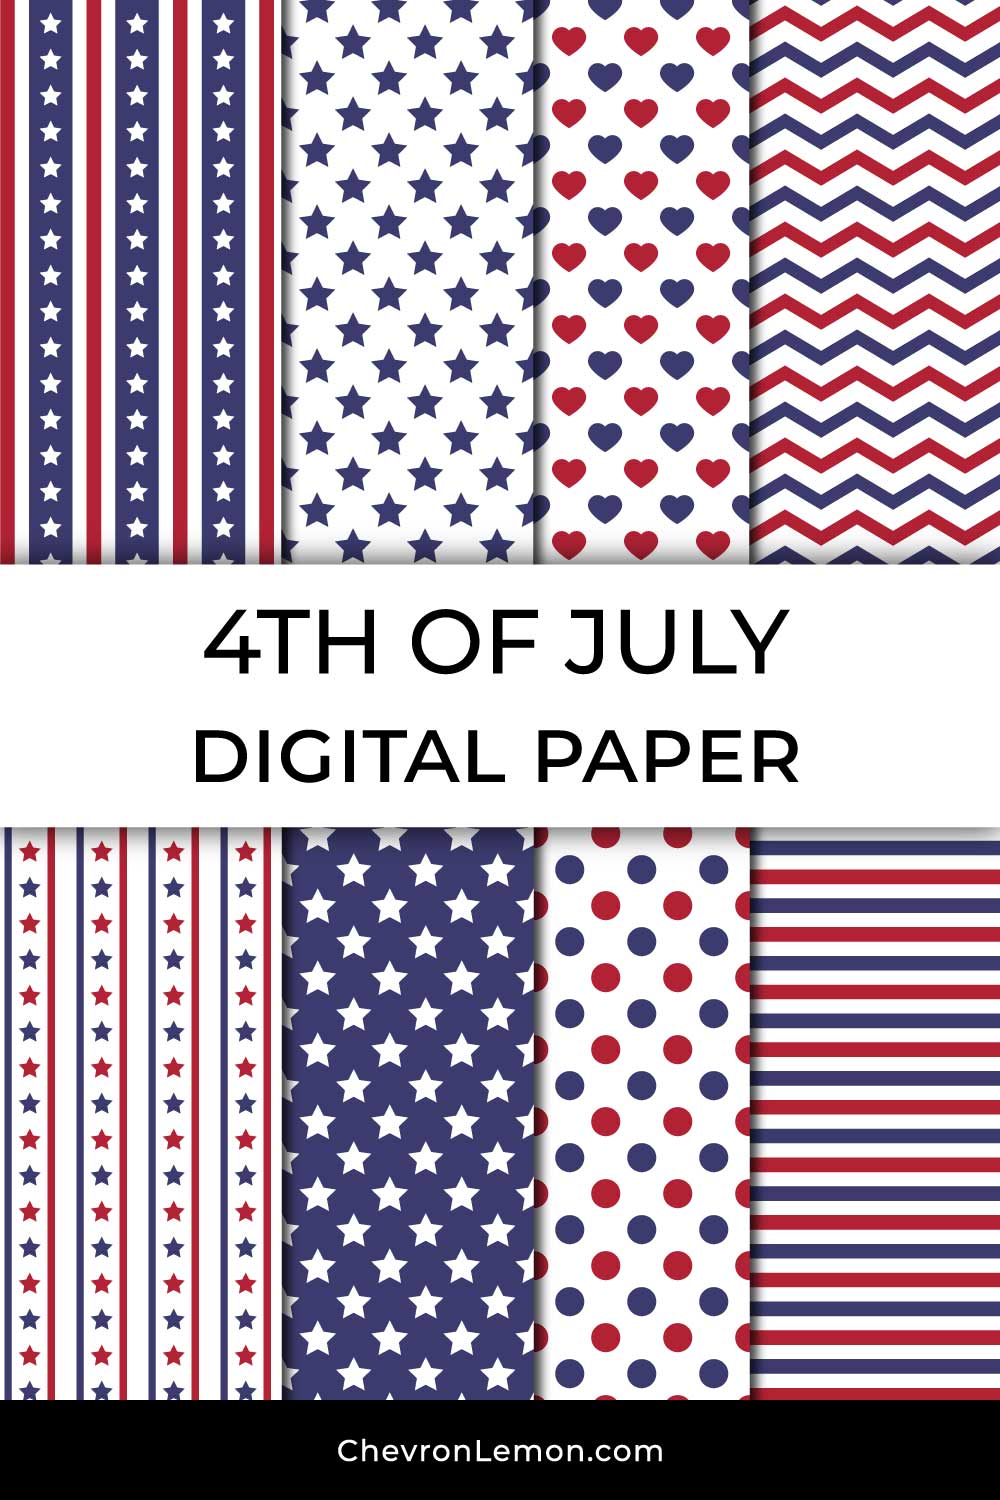 4th of July digital paper pin